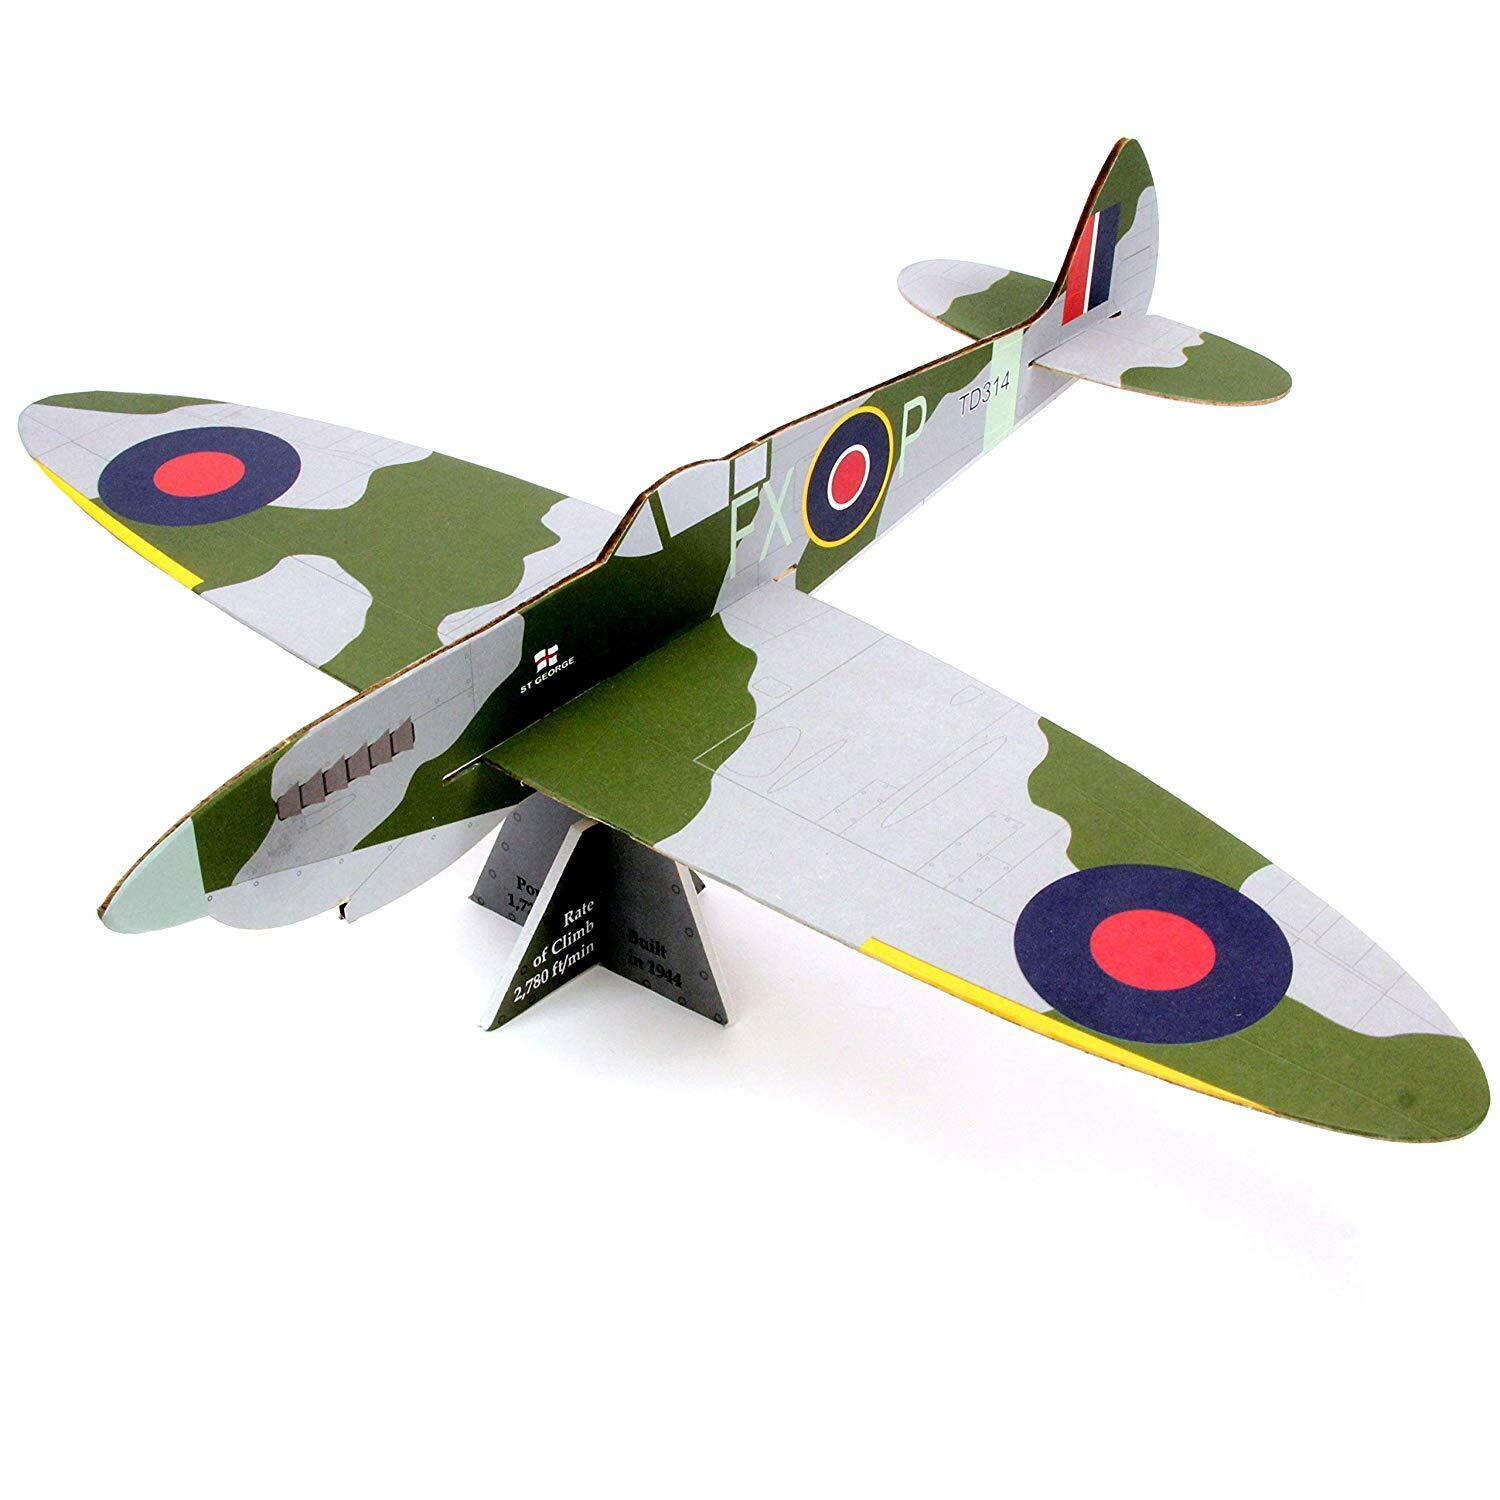 Spitfire Mk IXe: Prestige Models Free Flight Balsa Wood Model Plane Kit